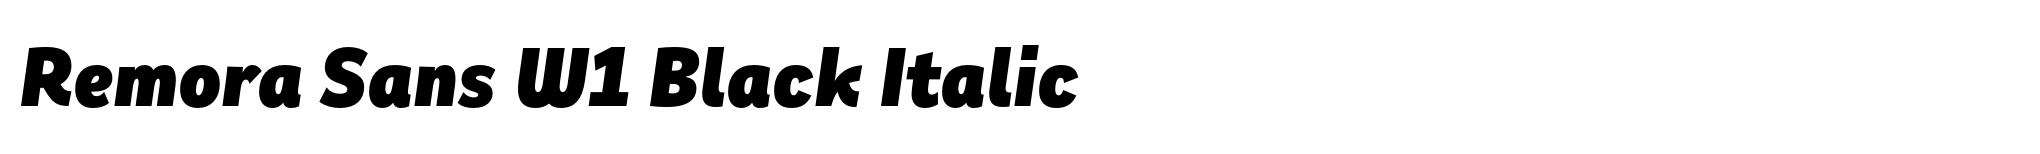 Remora Sans W1 Black Italic image